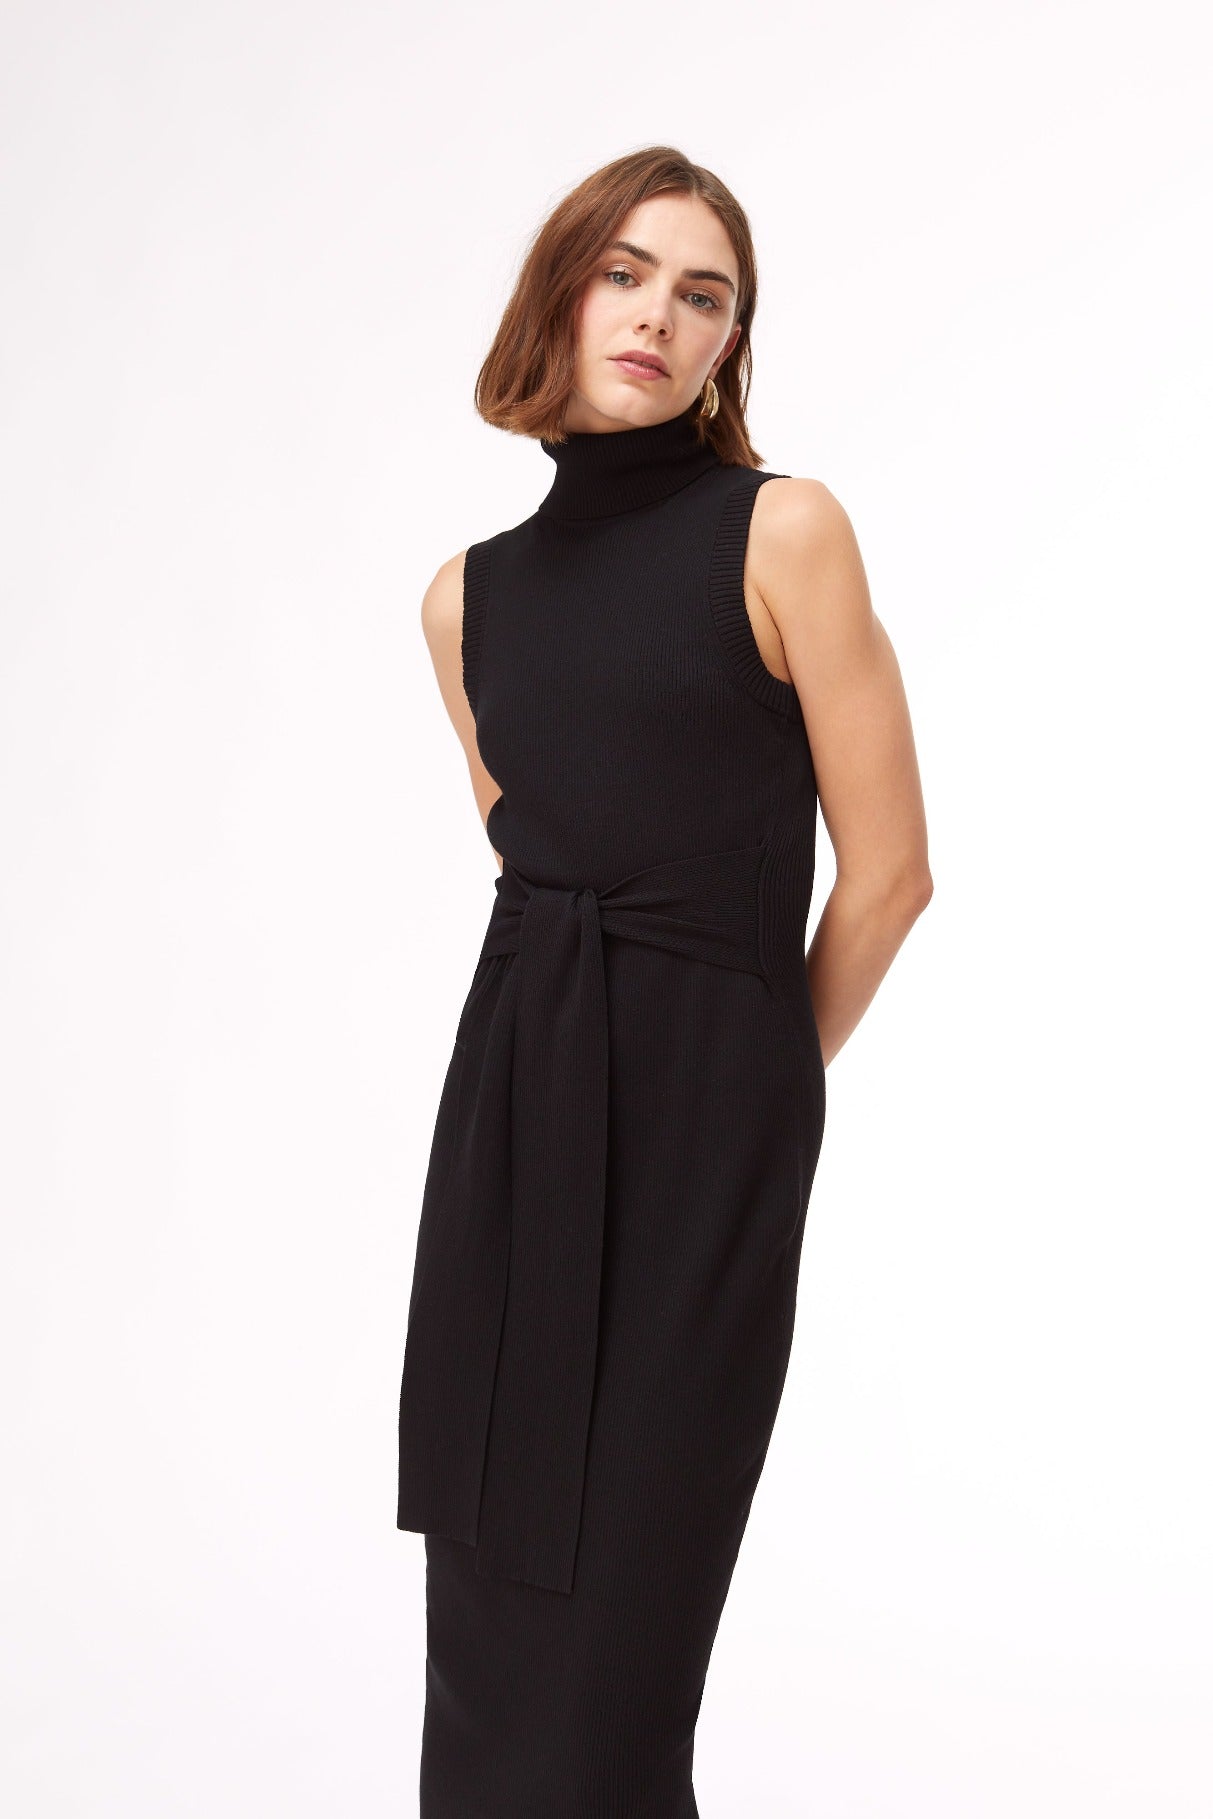 Black rowan knit tie front turtleneck neck midi dress - women's figure flattering designer fashion office to date night dresses 